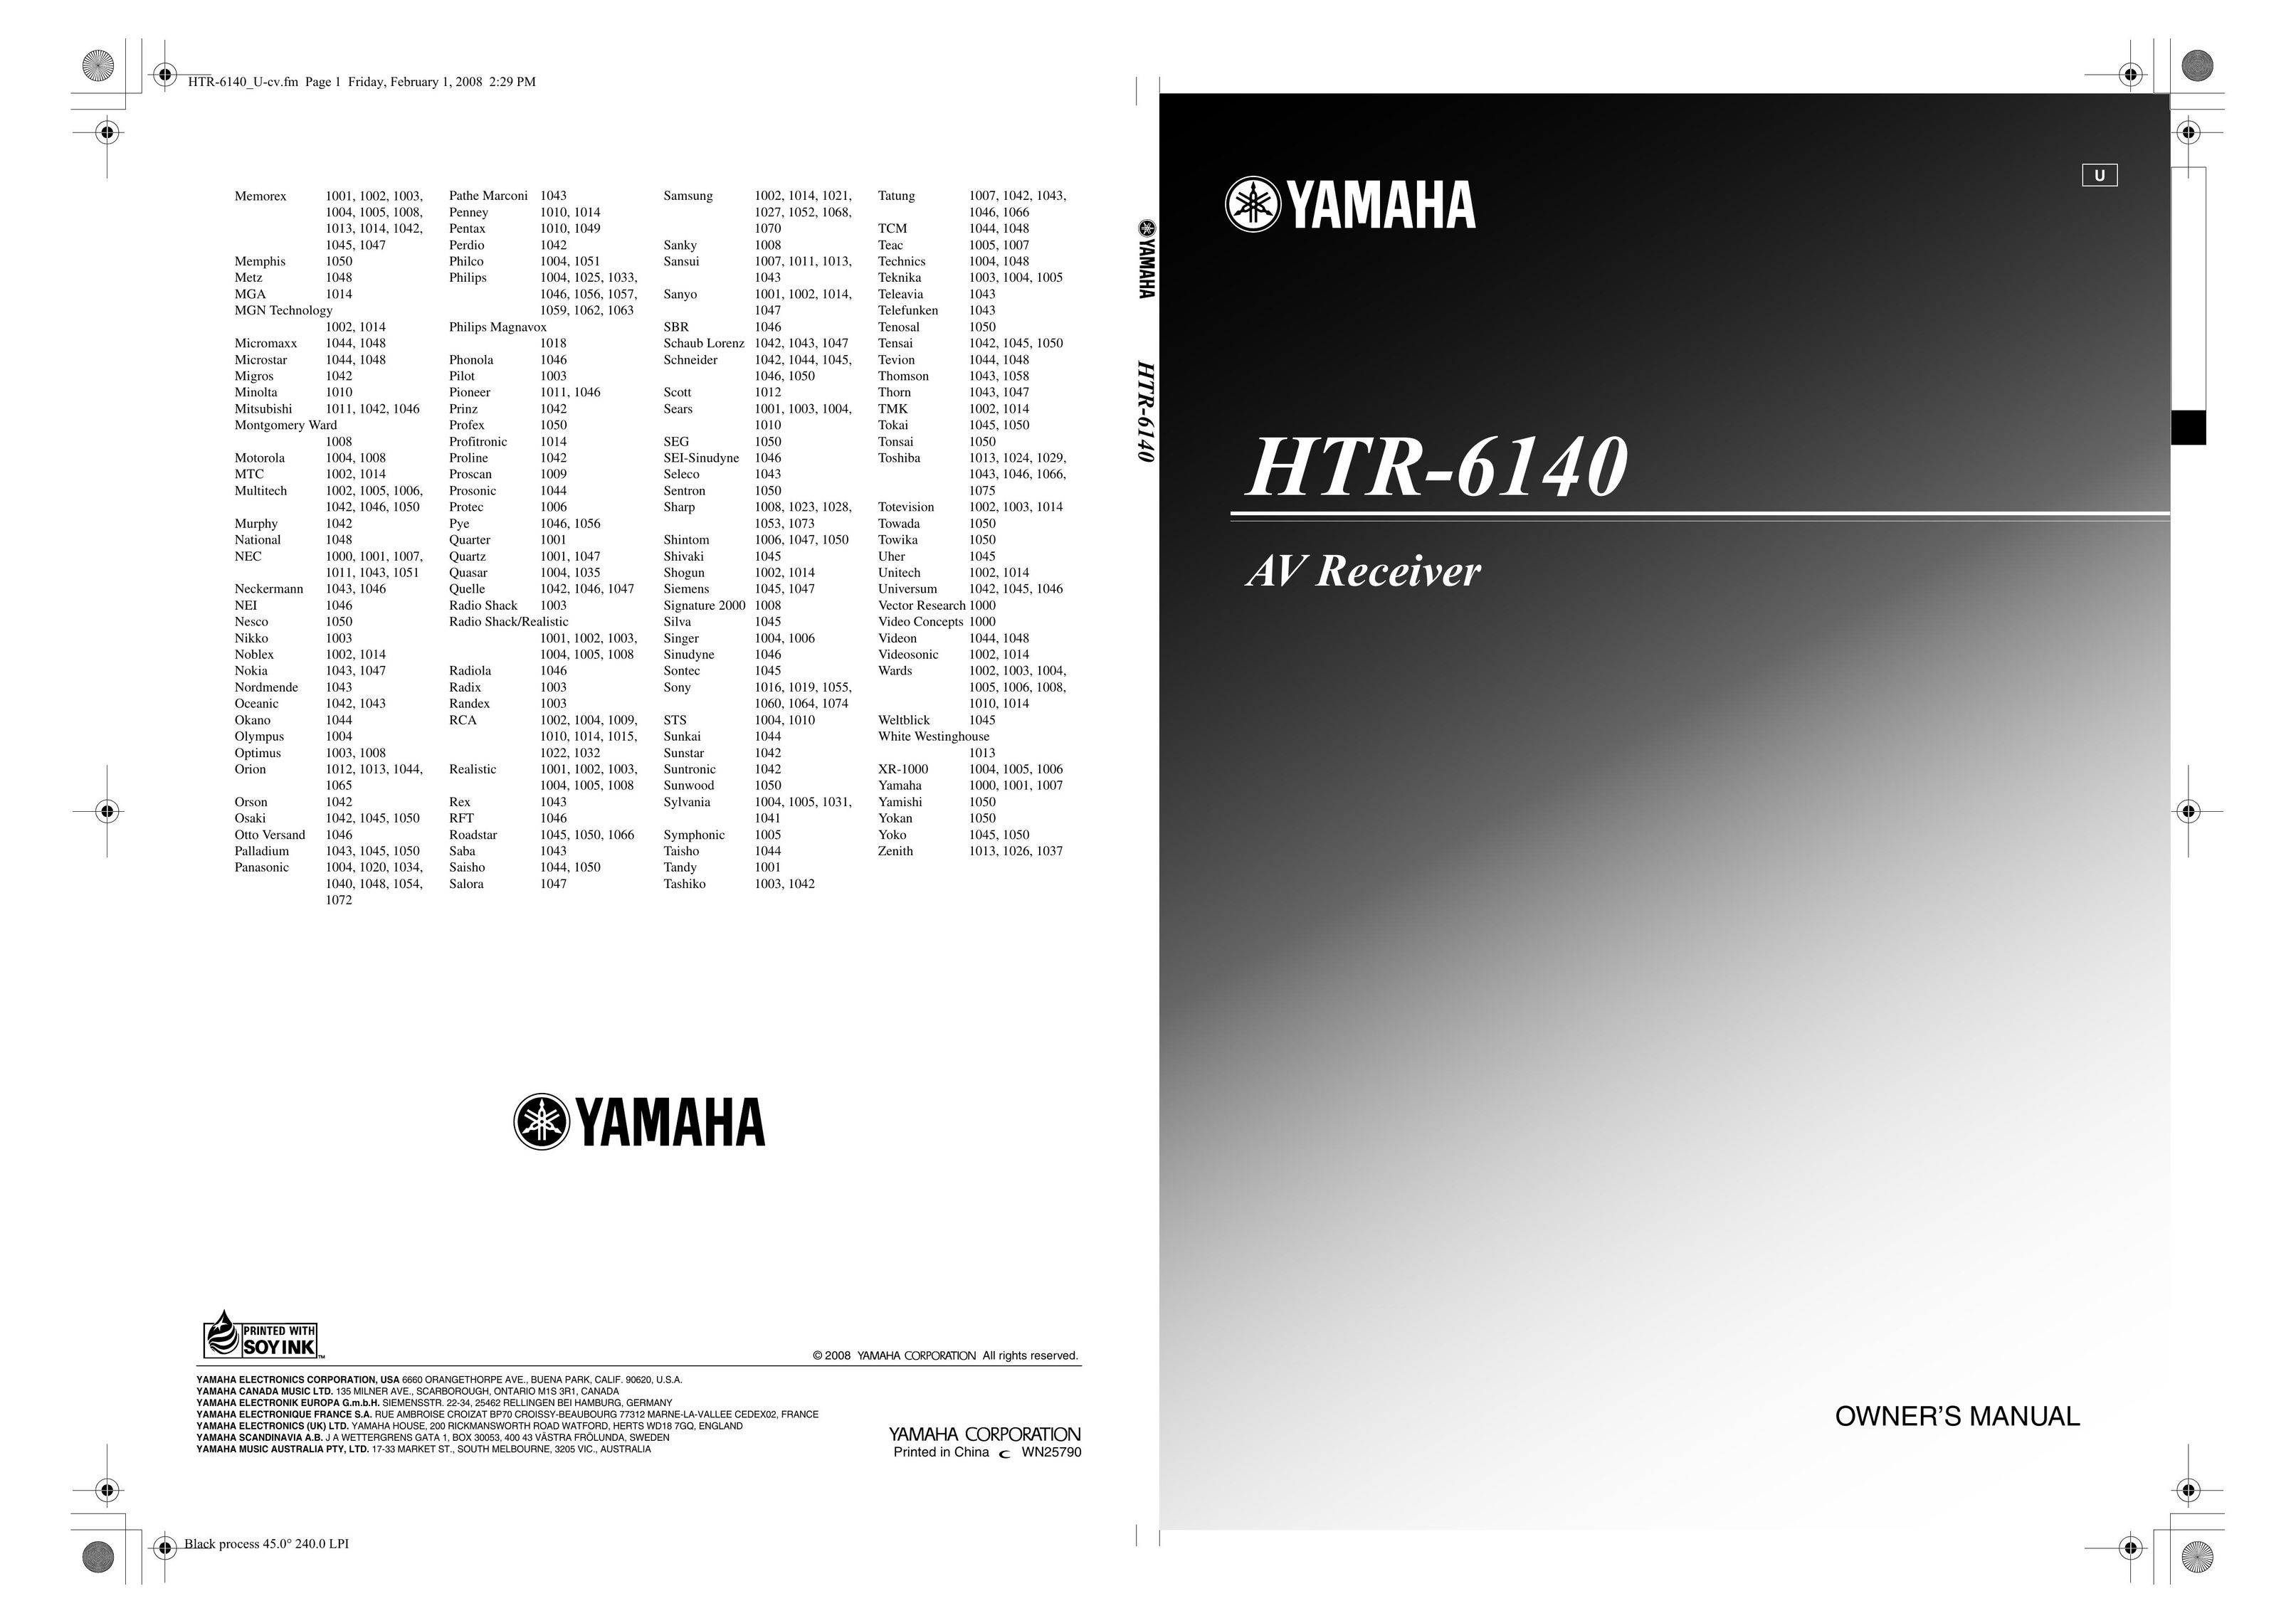 Yamaha HTR-6140 Stereo Receiver User Manual